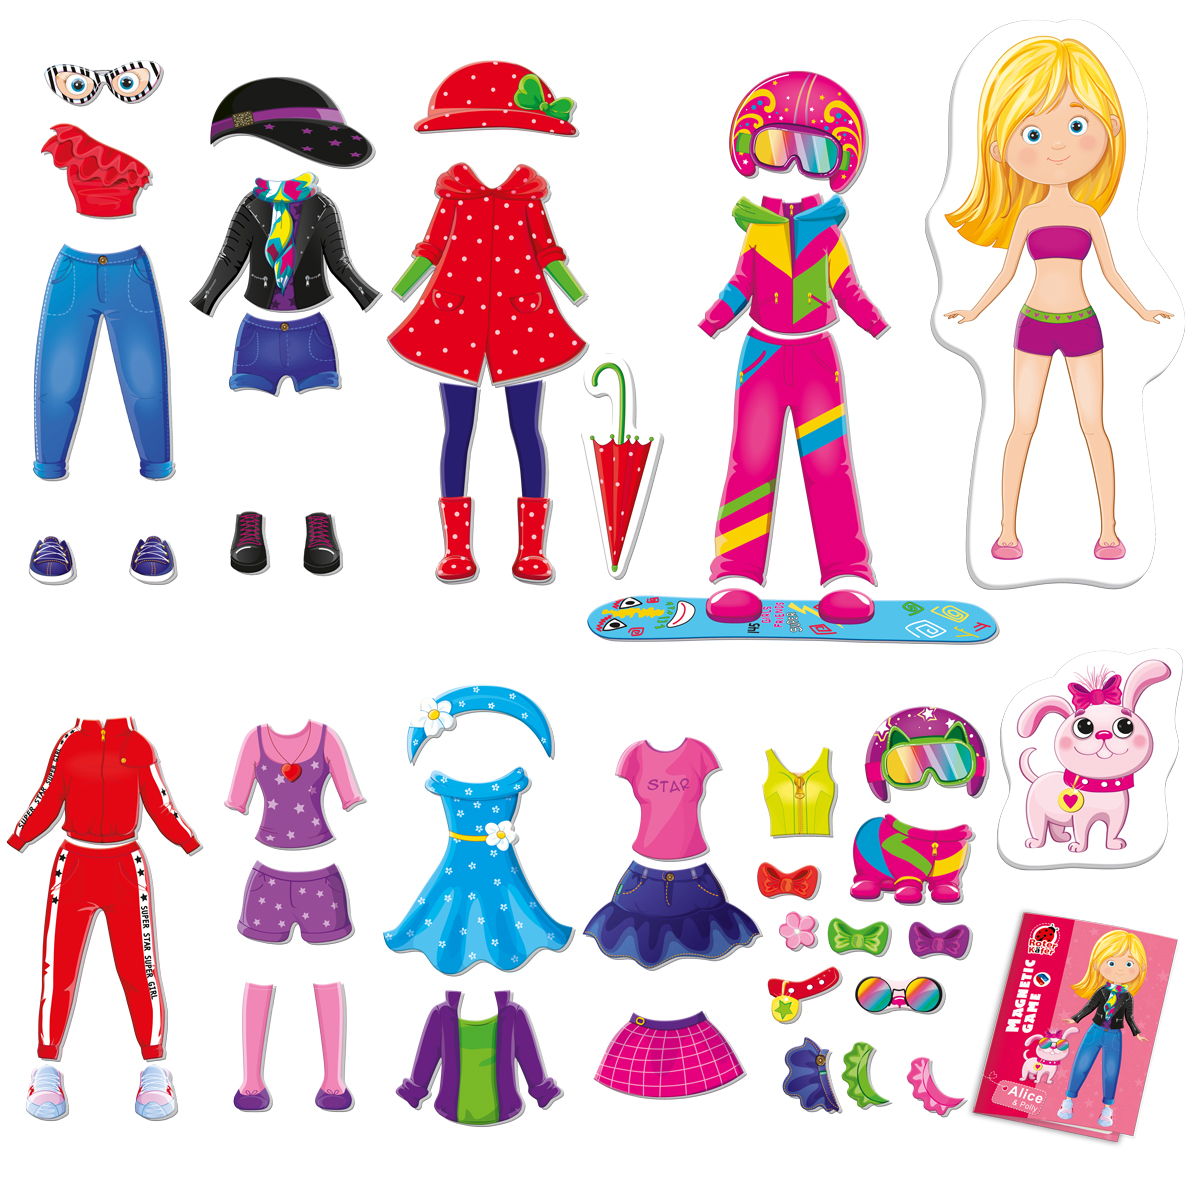 Магнитная игра Roter Kafer кукла-одевашка Alice and Polly - фото 2